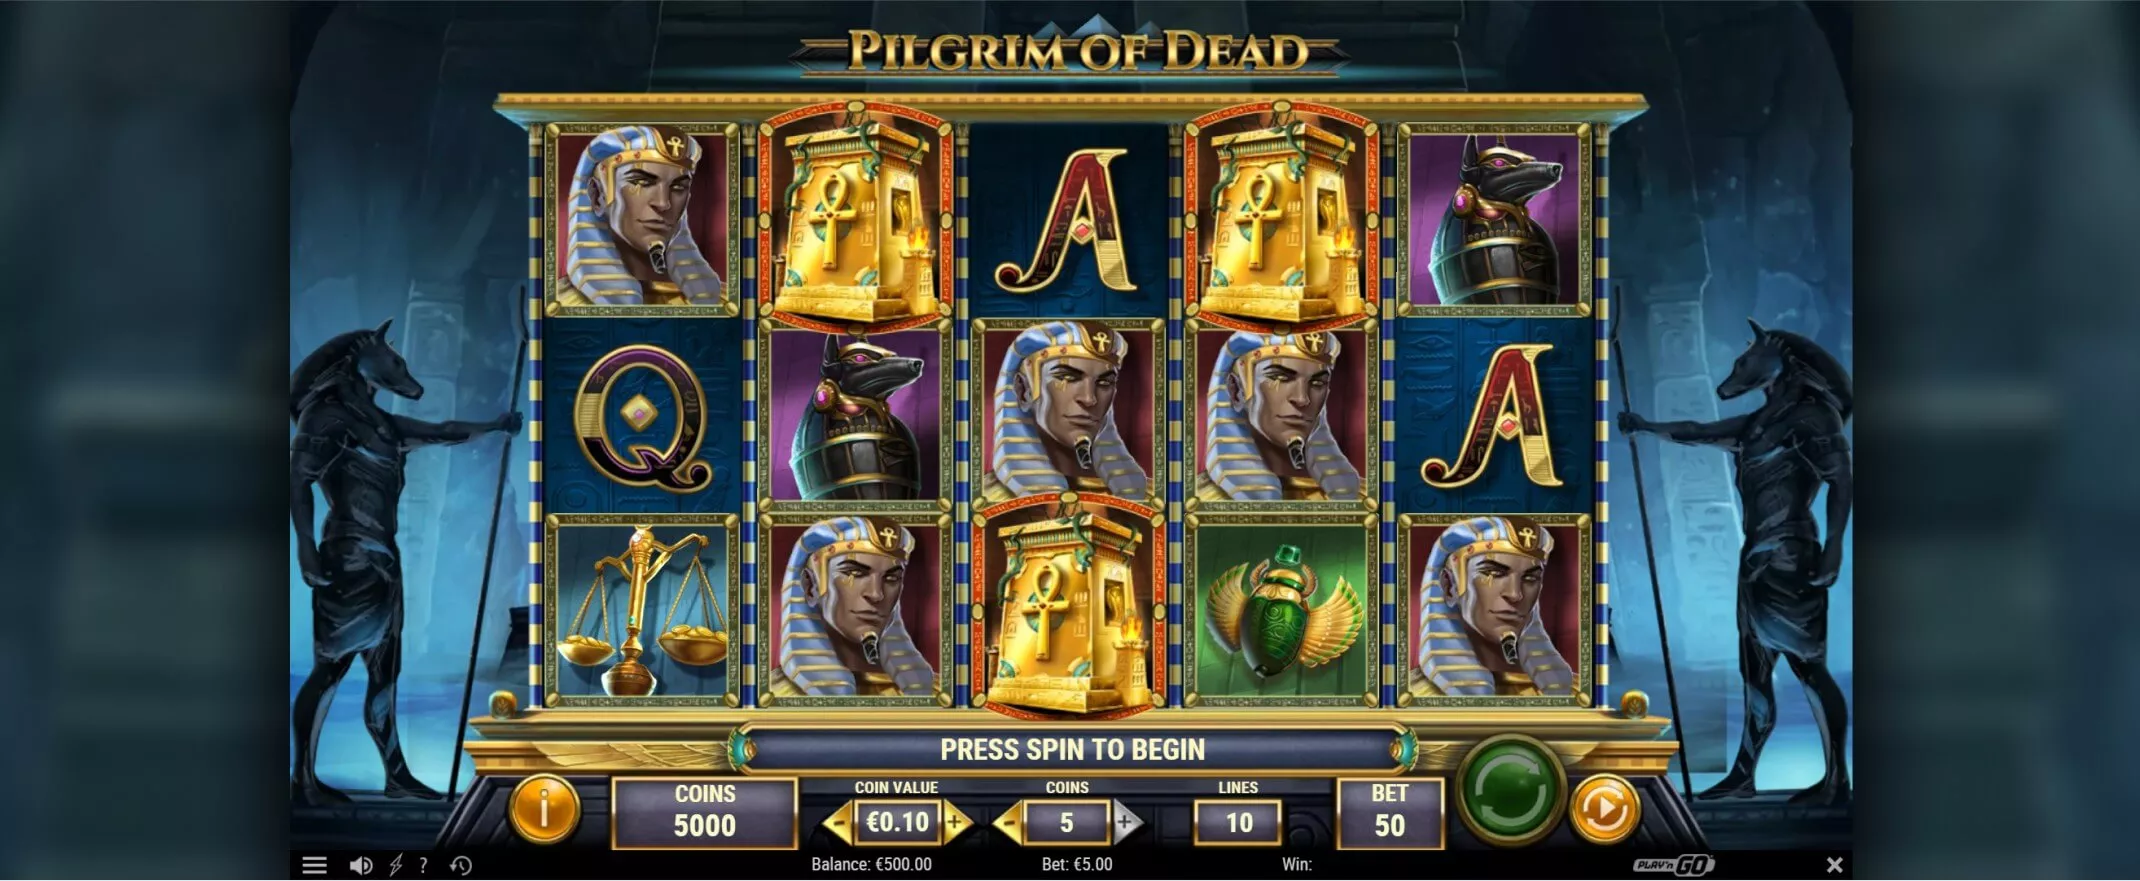 Kuvankaappaus Pilgrim of Dead peliautomaatista